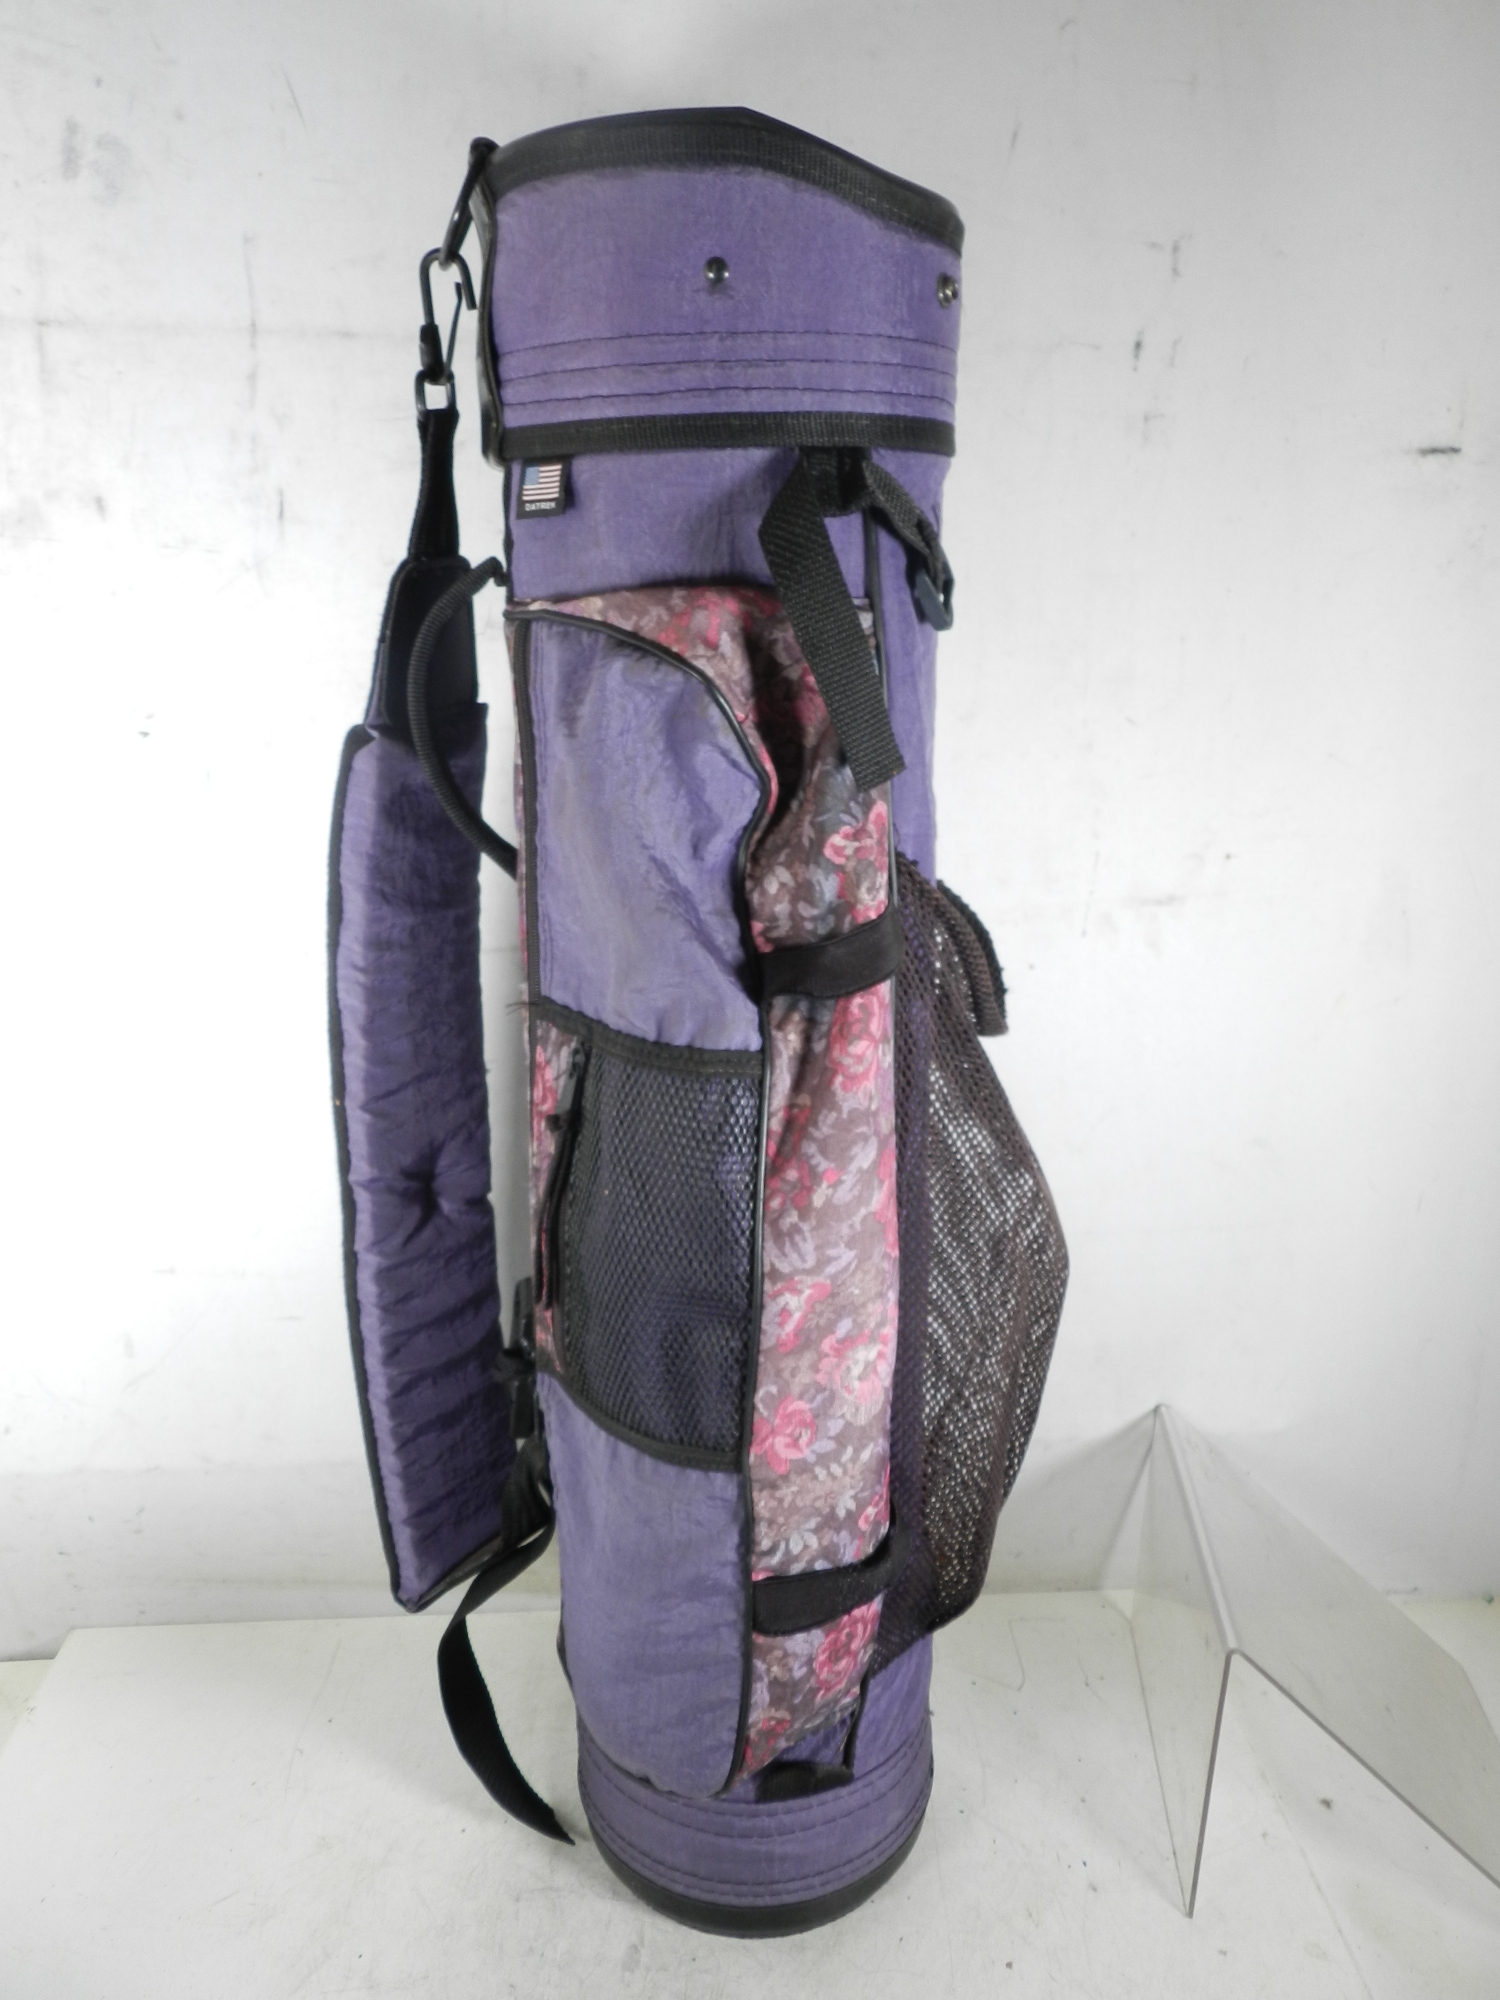 DATREK Women's Golf Club Bag Purple Floral Design 4 Way Divider, Carry Strap